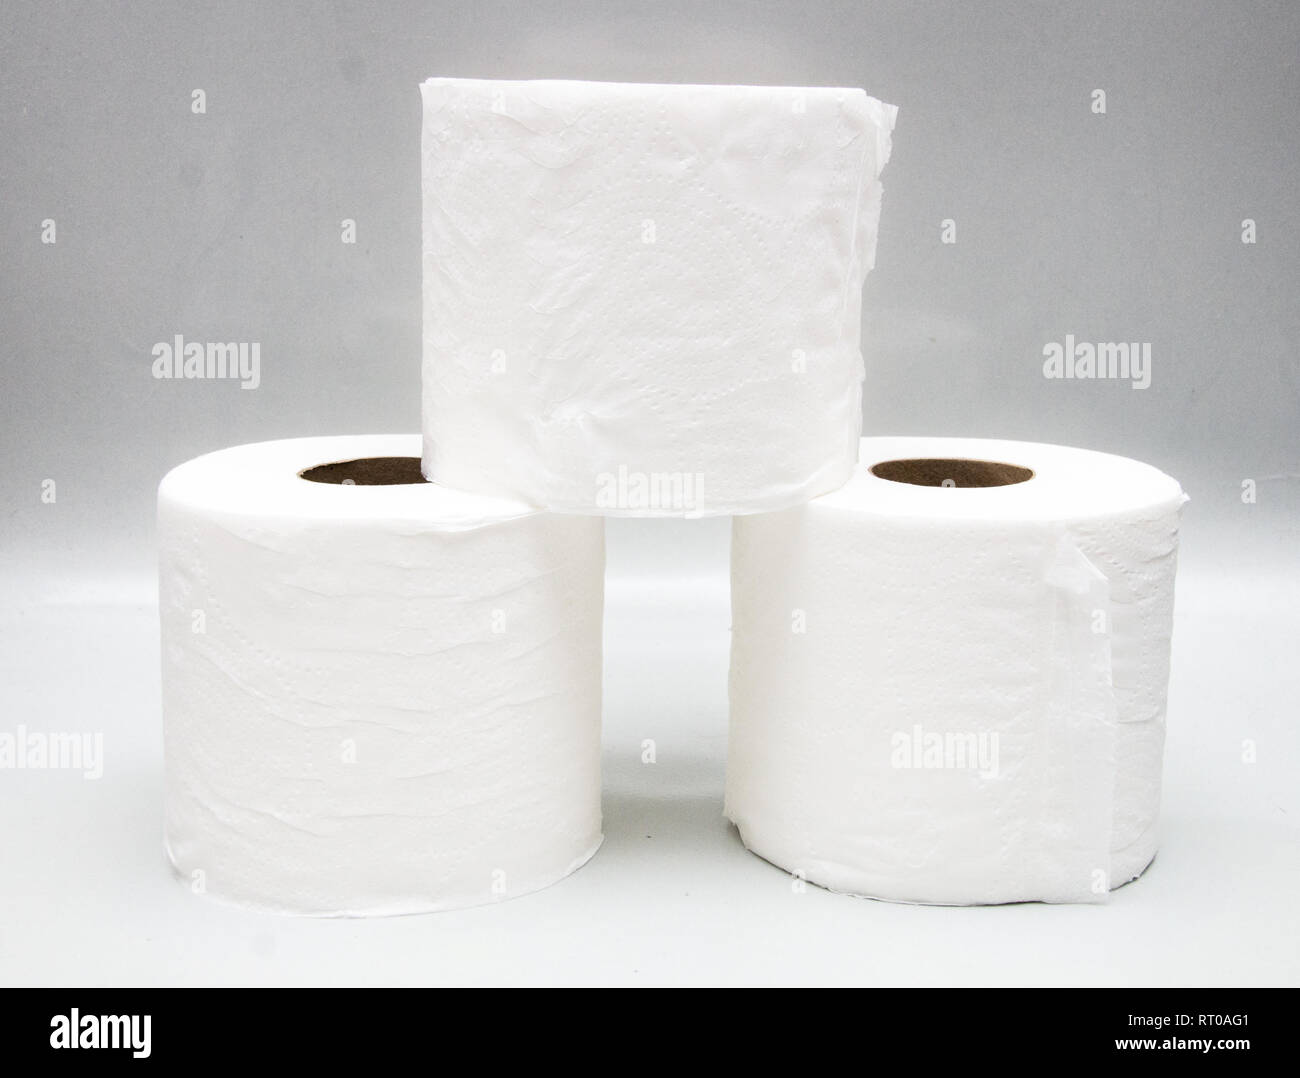 Three stacks of toilet paper Stock Photo - Alamy